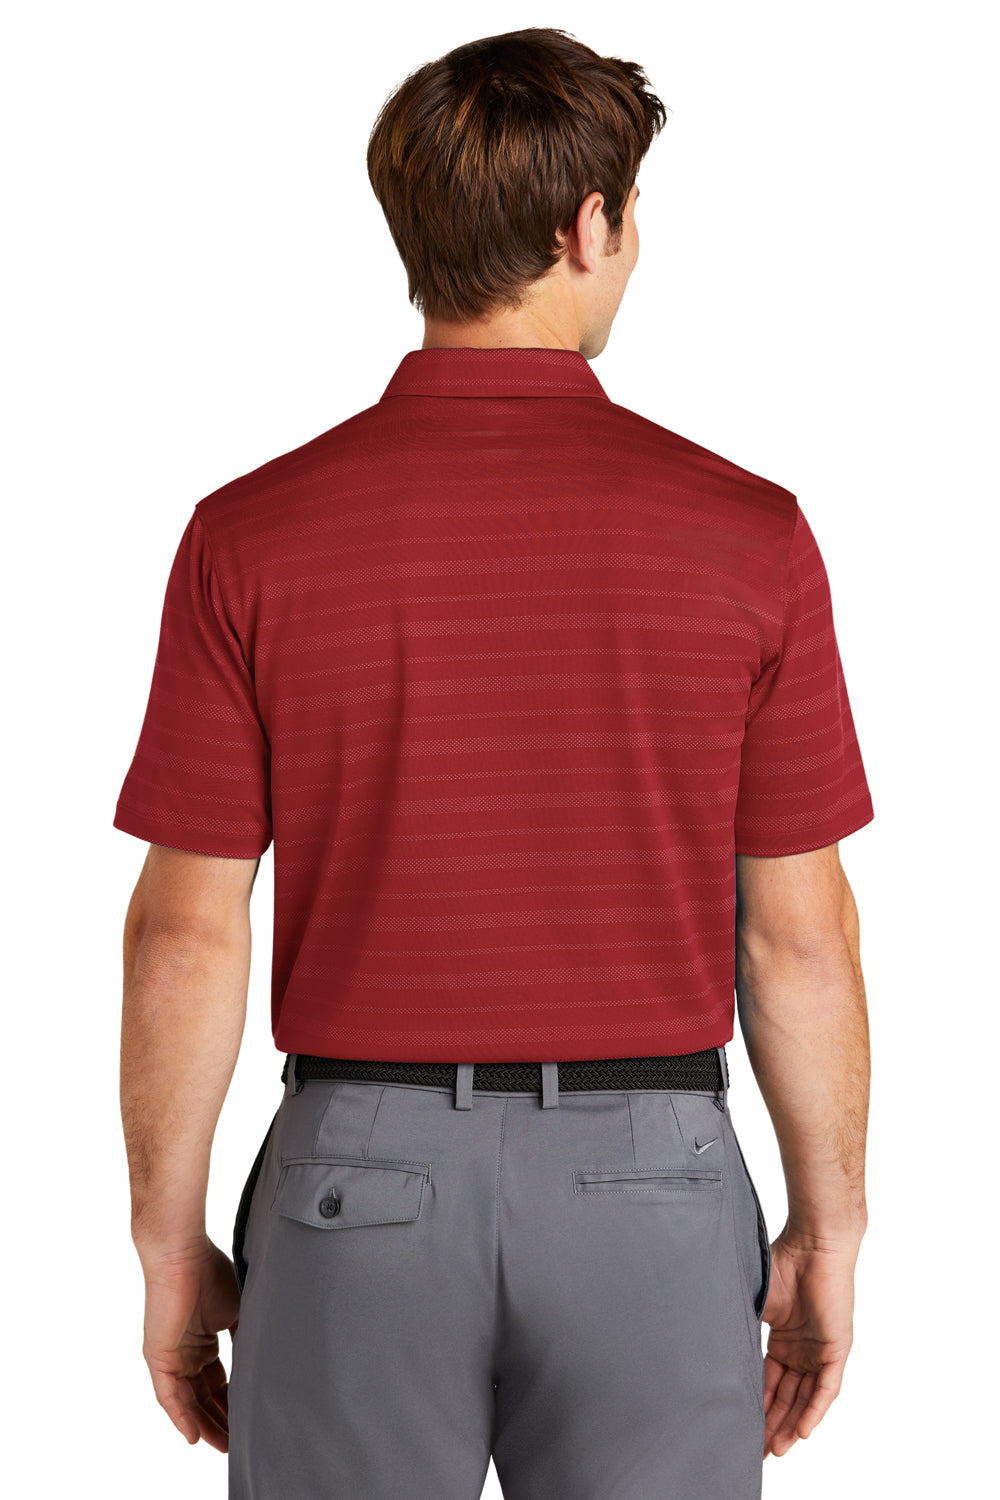 Nike NKDC2115 Mens Vapor Jacquard Dri-Fit Moisture Wicking Short Sleeve Polo Shirt Team Red Model Back